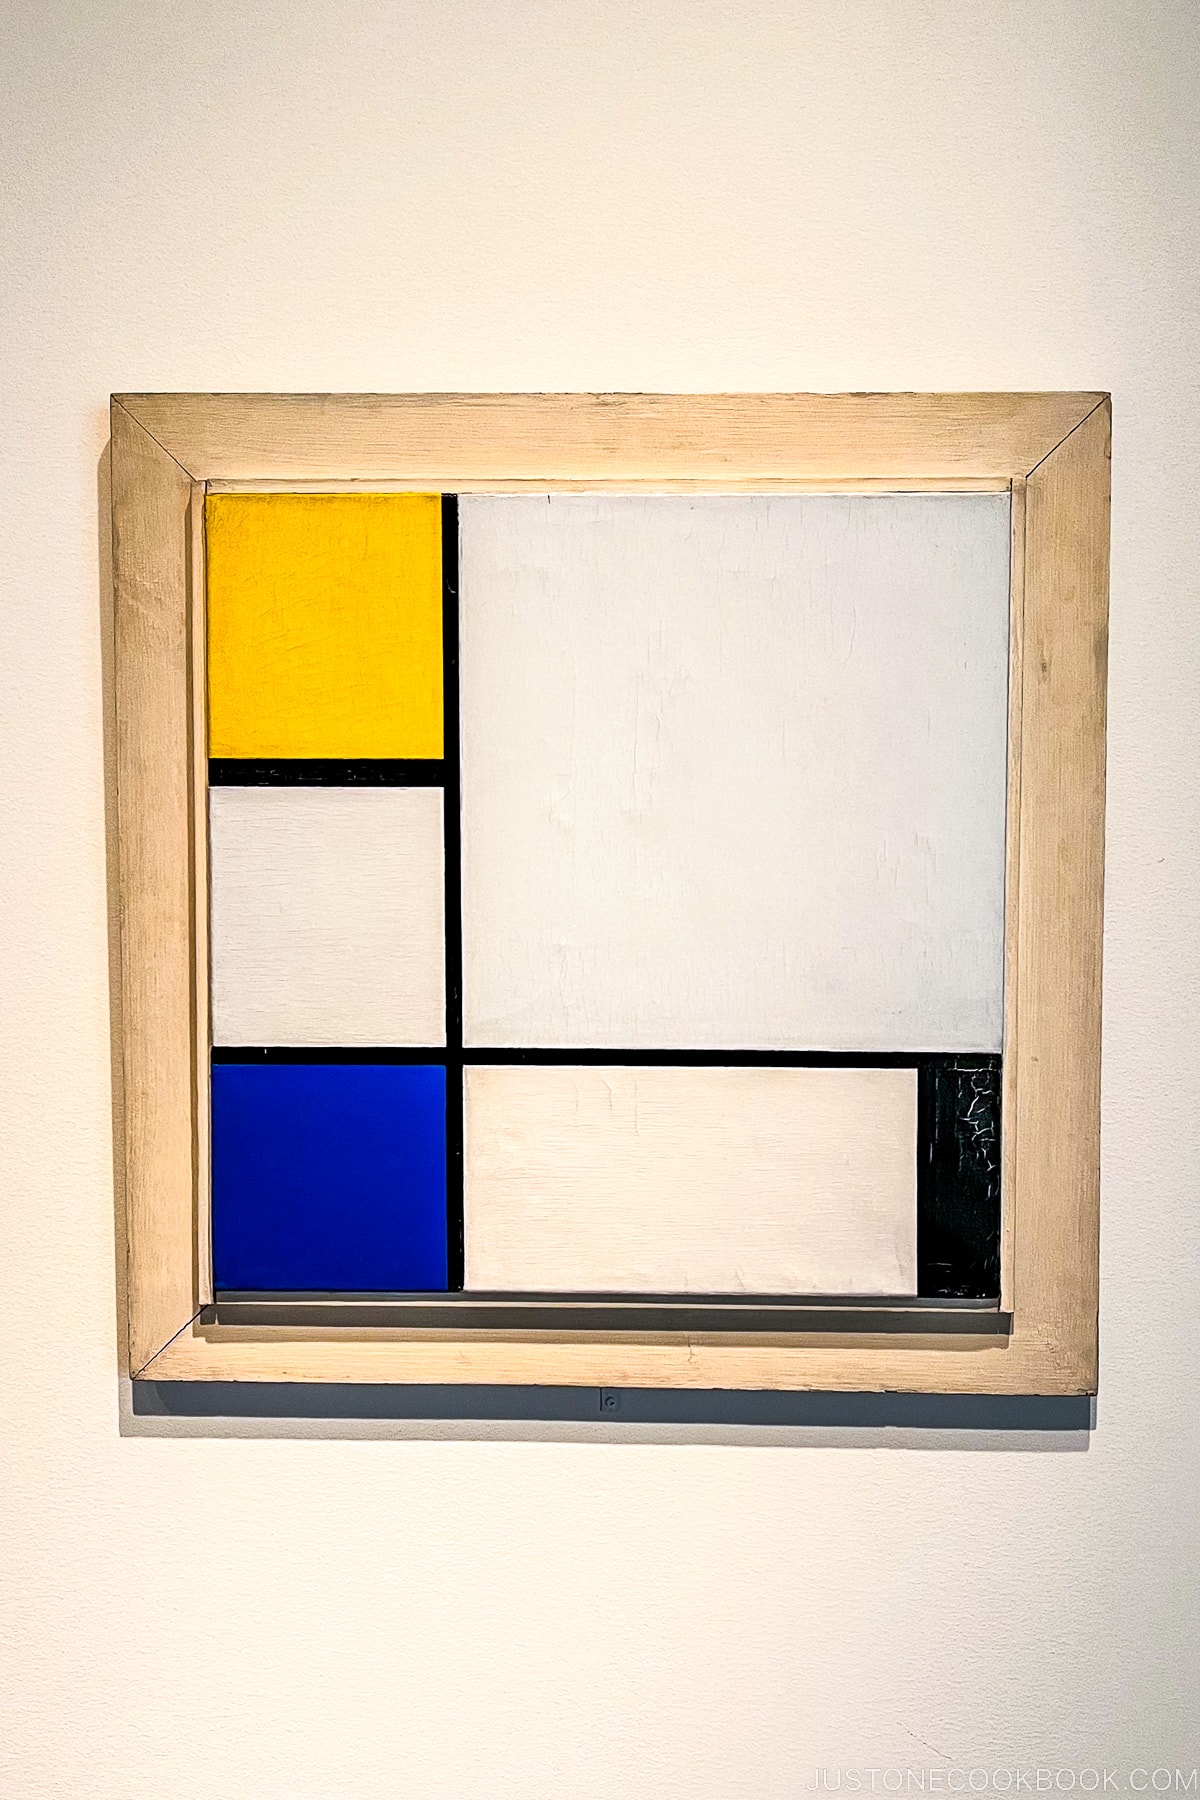 Piet Mondrian artwork at Yale University Art Gallery